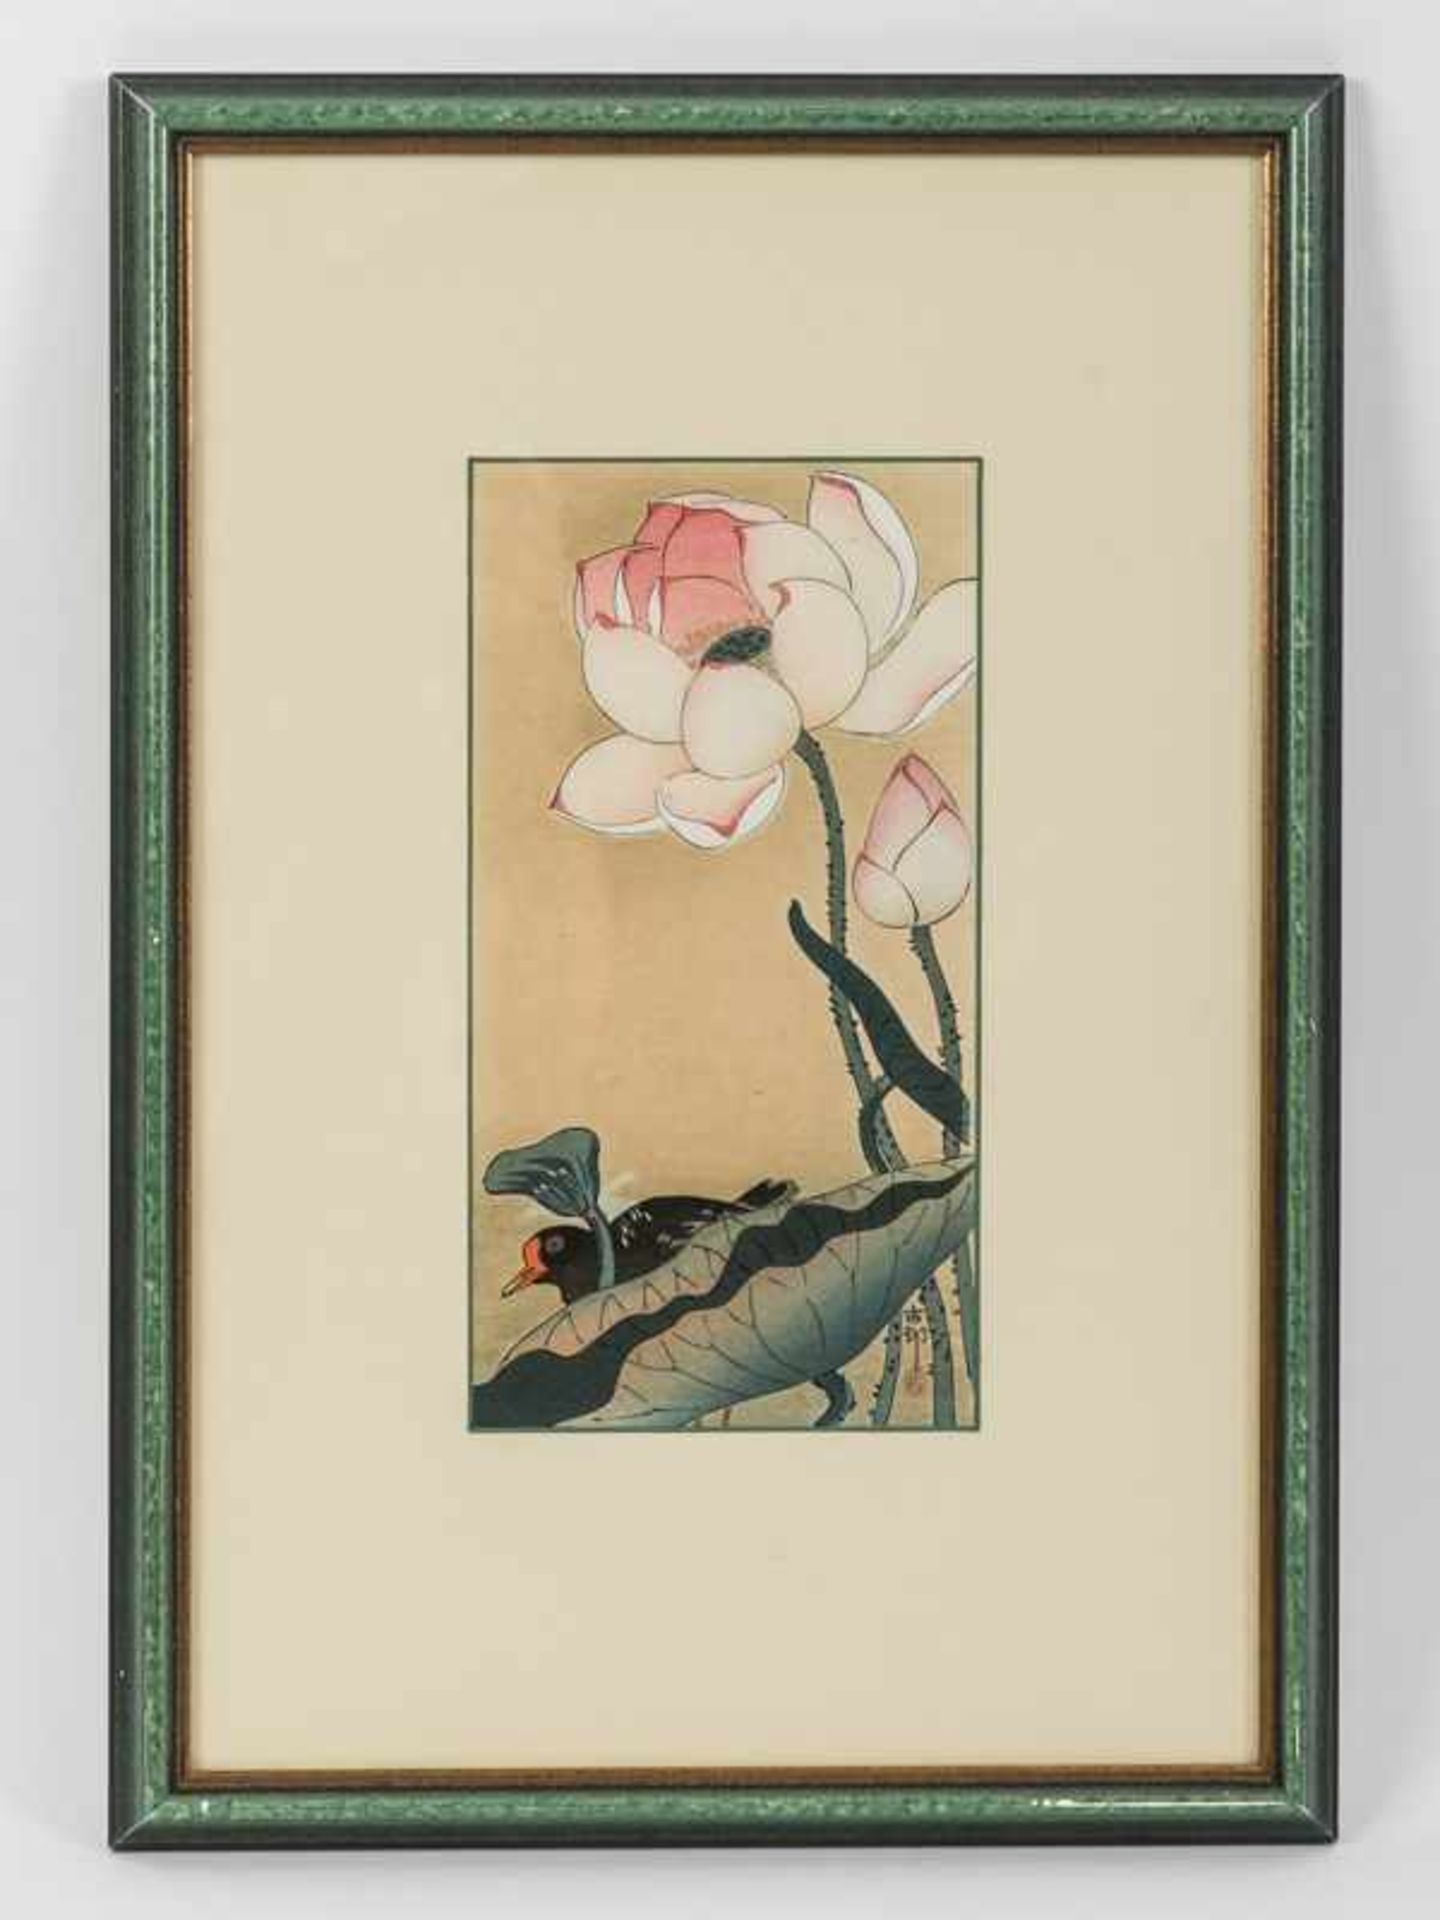 Ohara, Koson - später auch Shoson (1877-1945). "Teichhuhn und Lotusblüte", Farbholzschnitt, Anfang